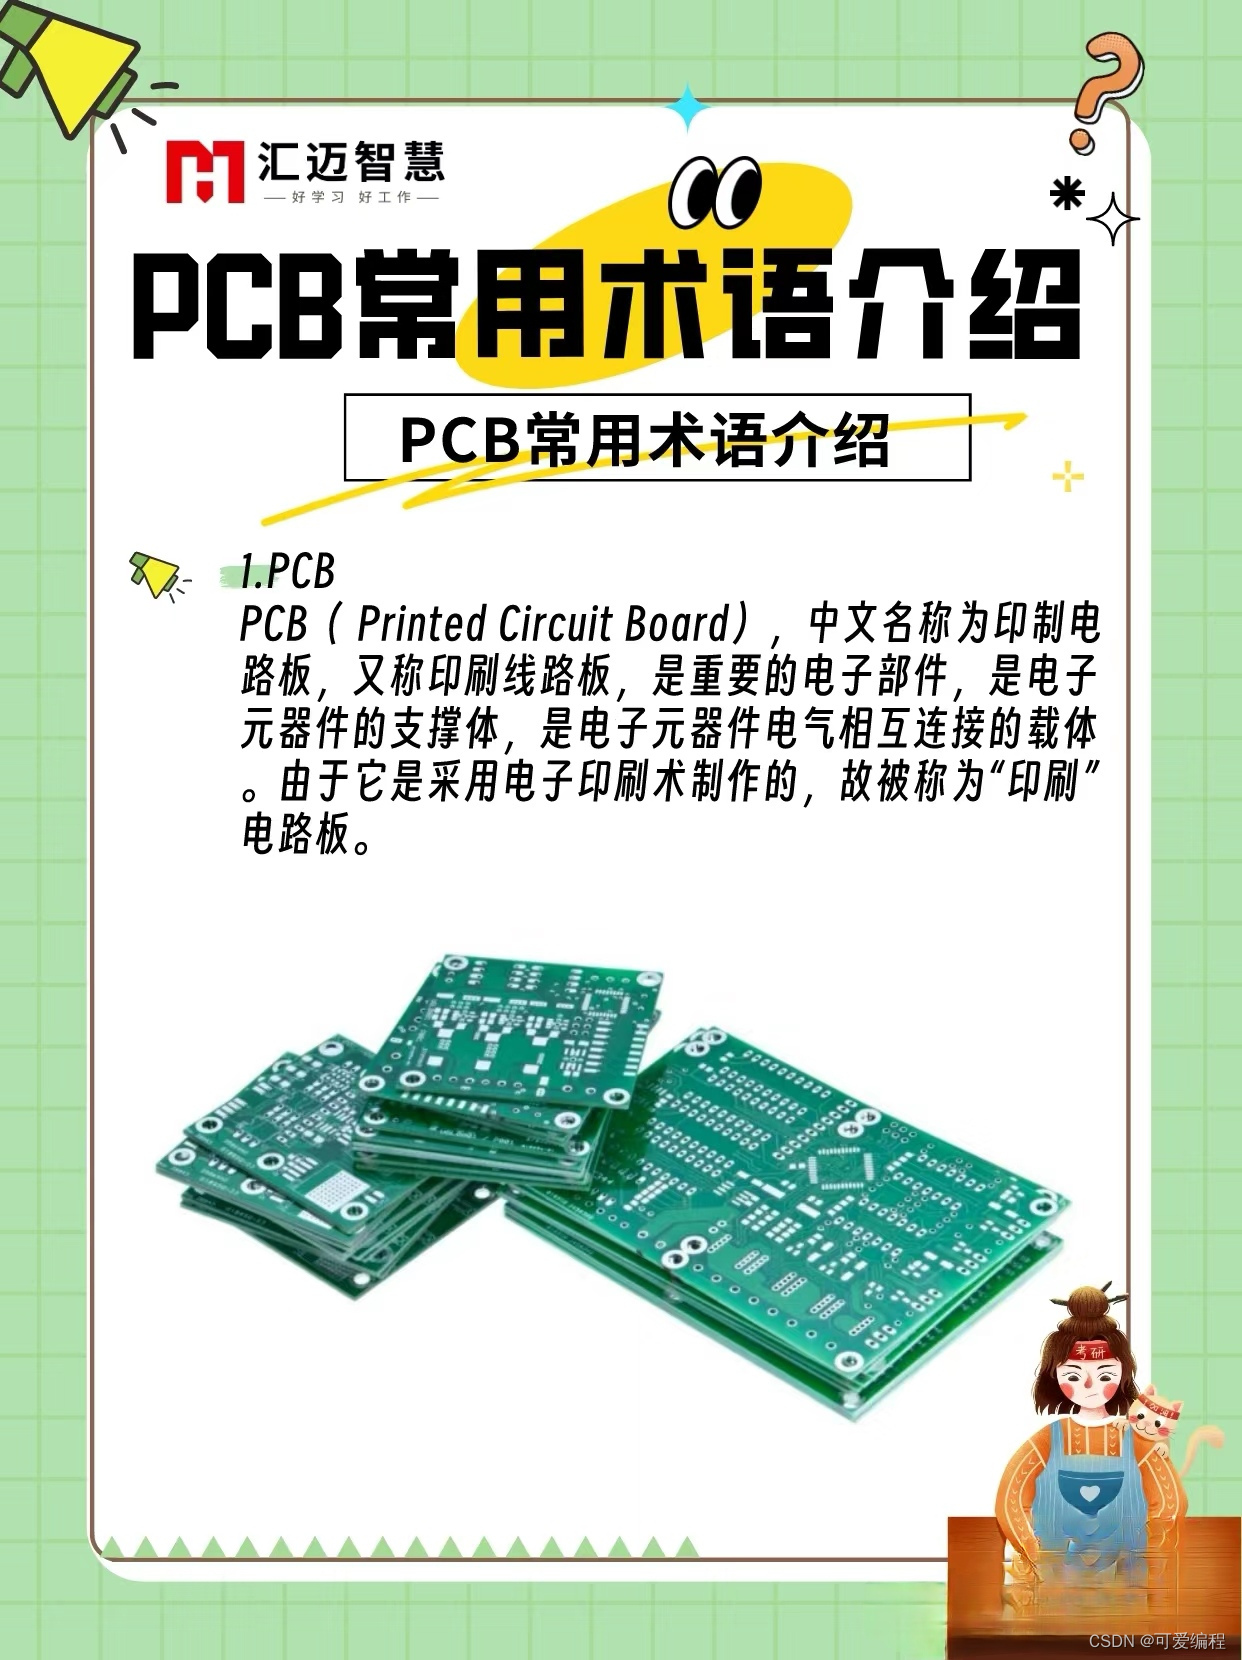 PCB在工业领域的应用以及人工智能的影响。